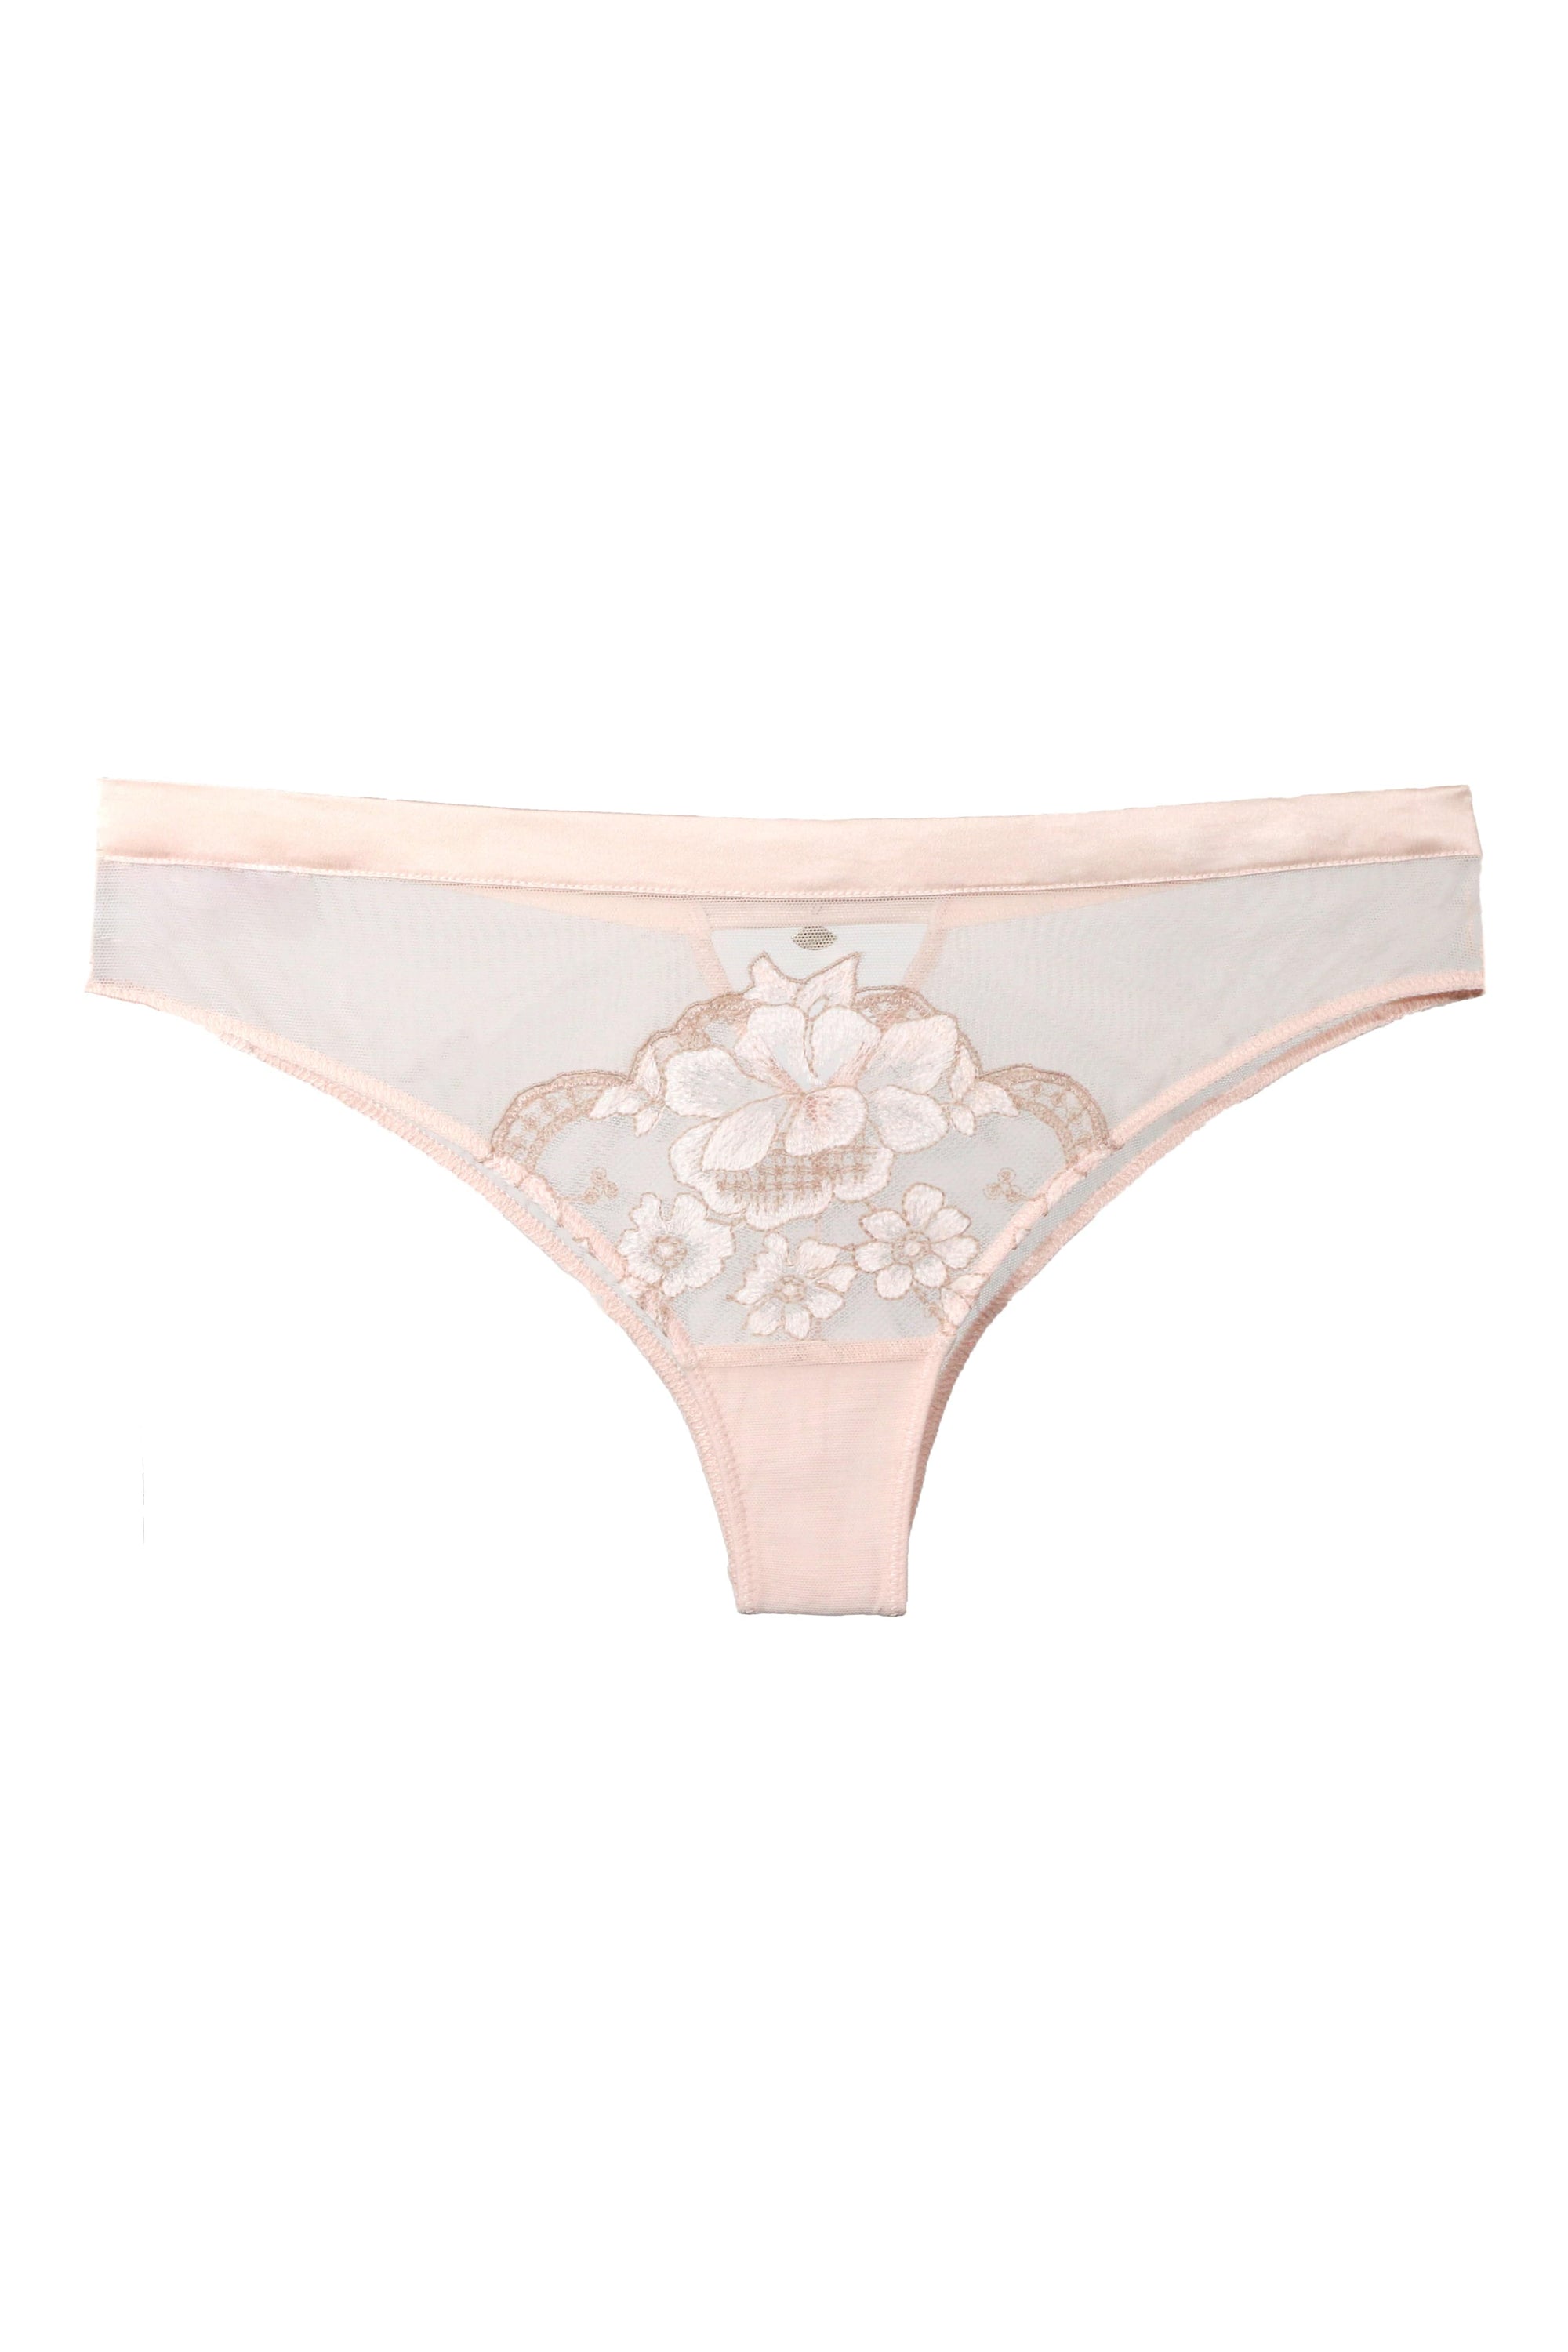  Victoria's Secret Pink No-Show Cheekster Panty, Bronze